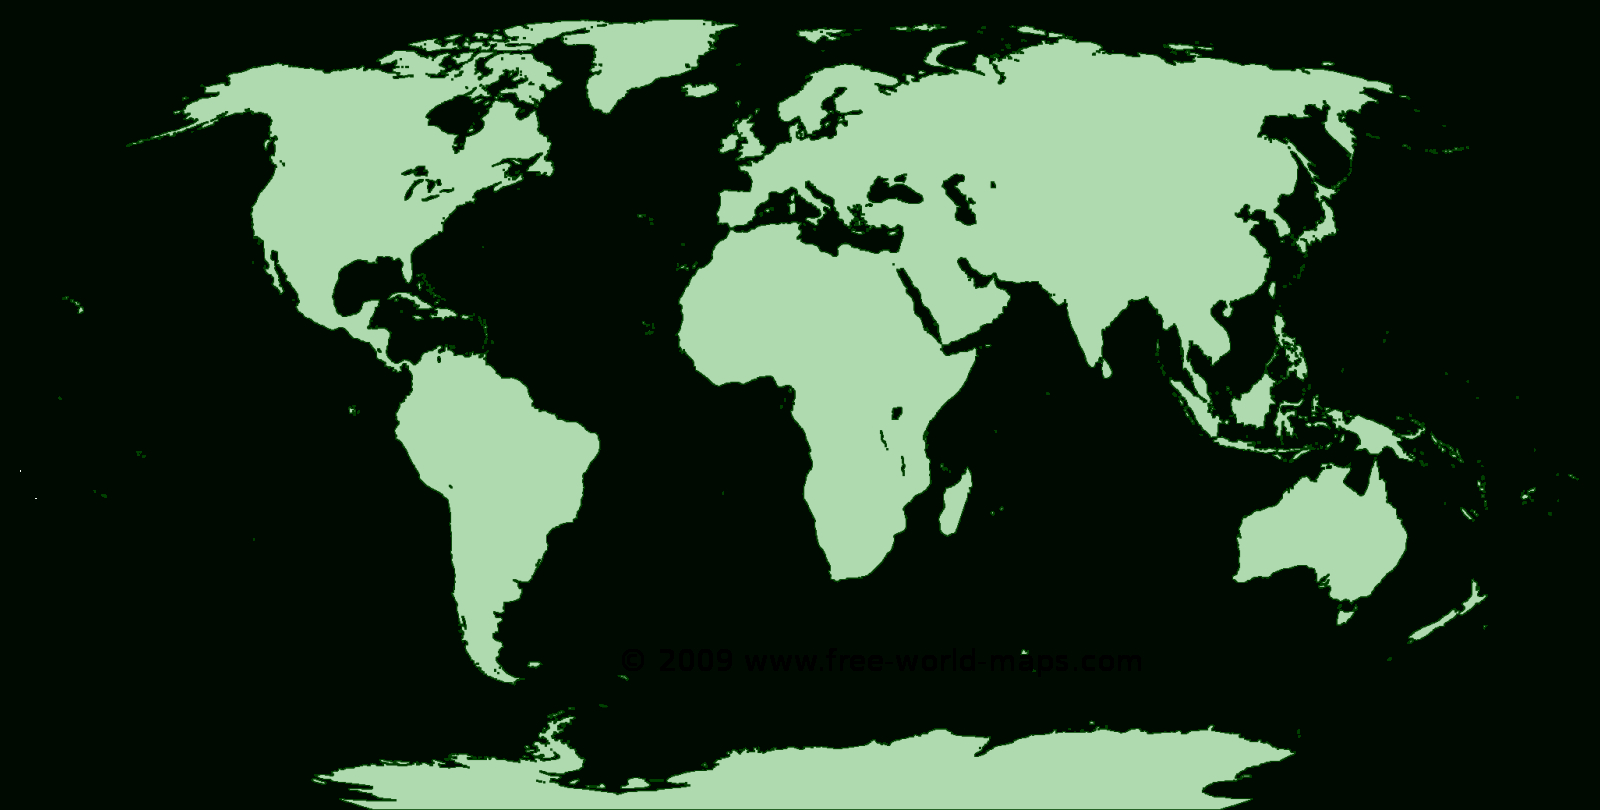 Printable Blank World Maps | Free World Maps - Free Printable World Maps Online